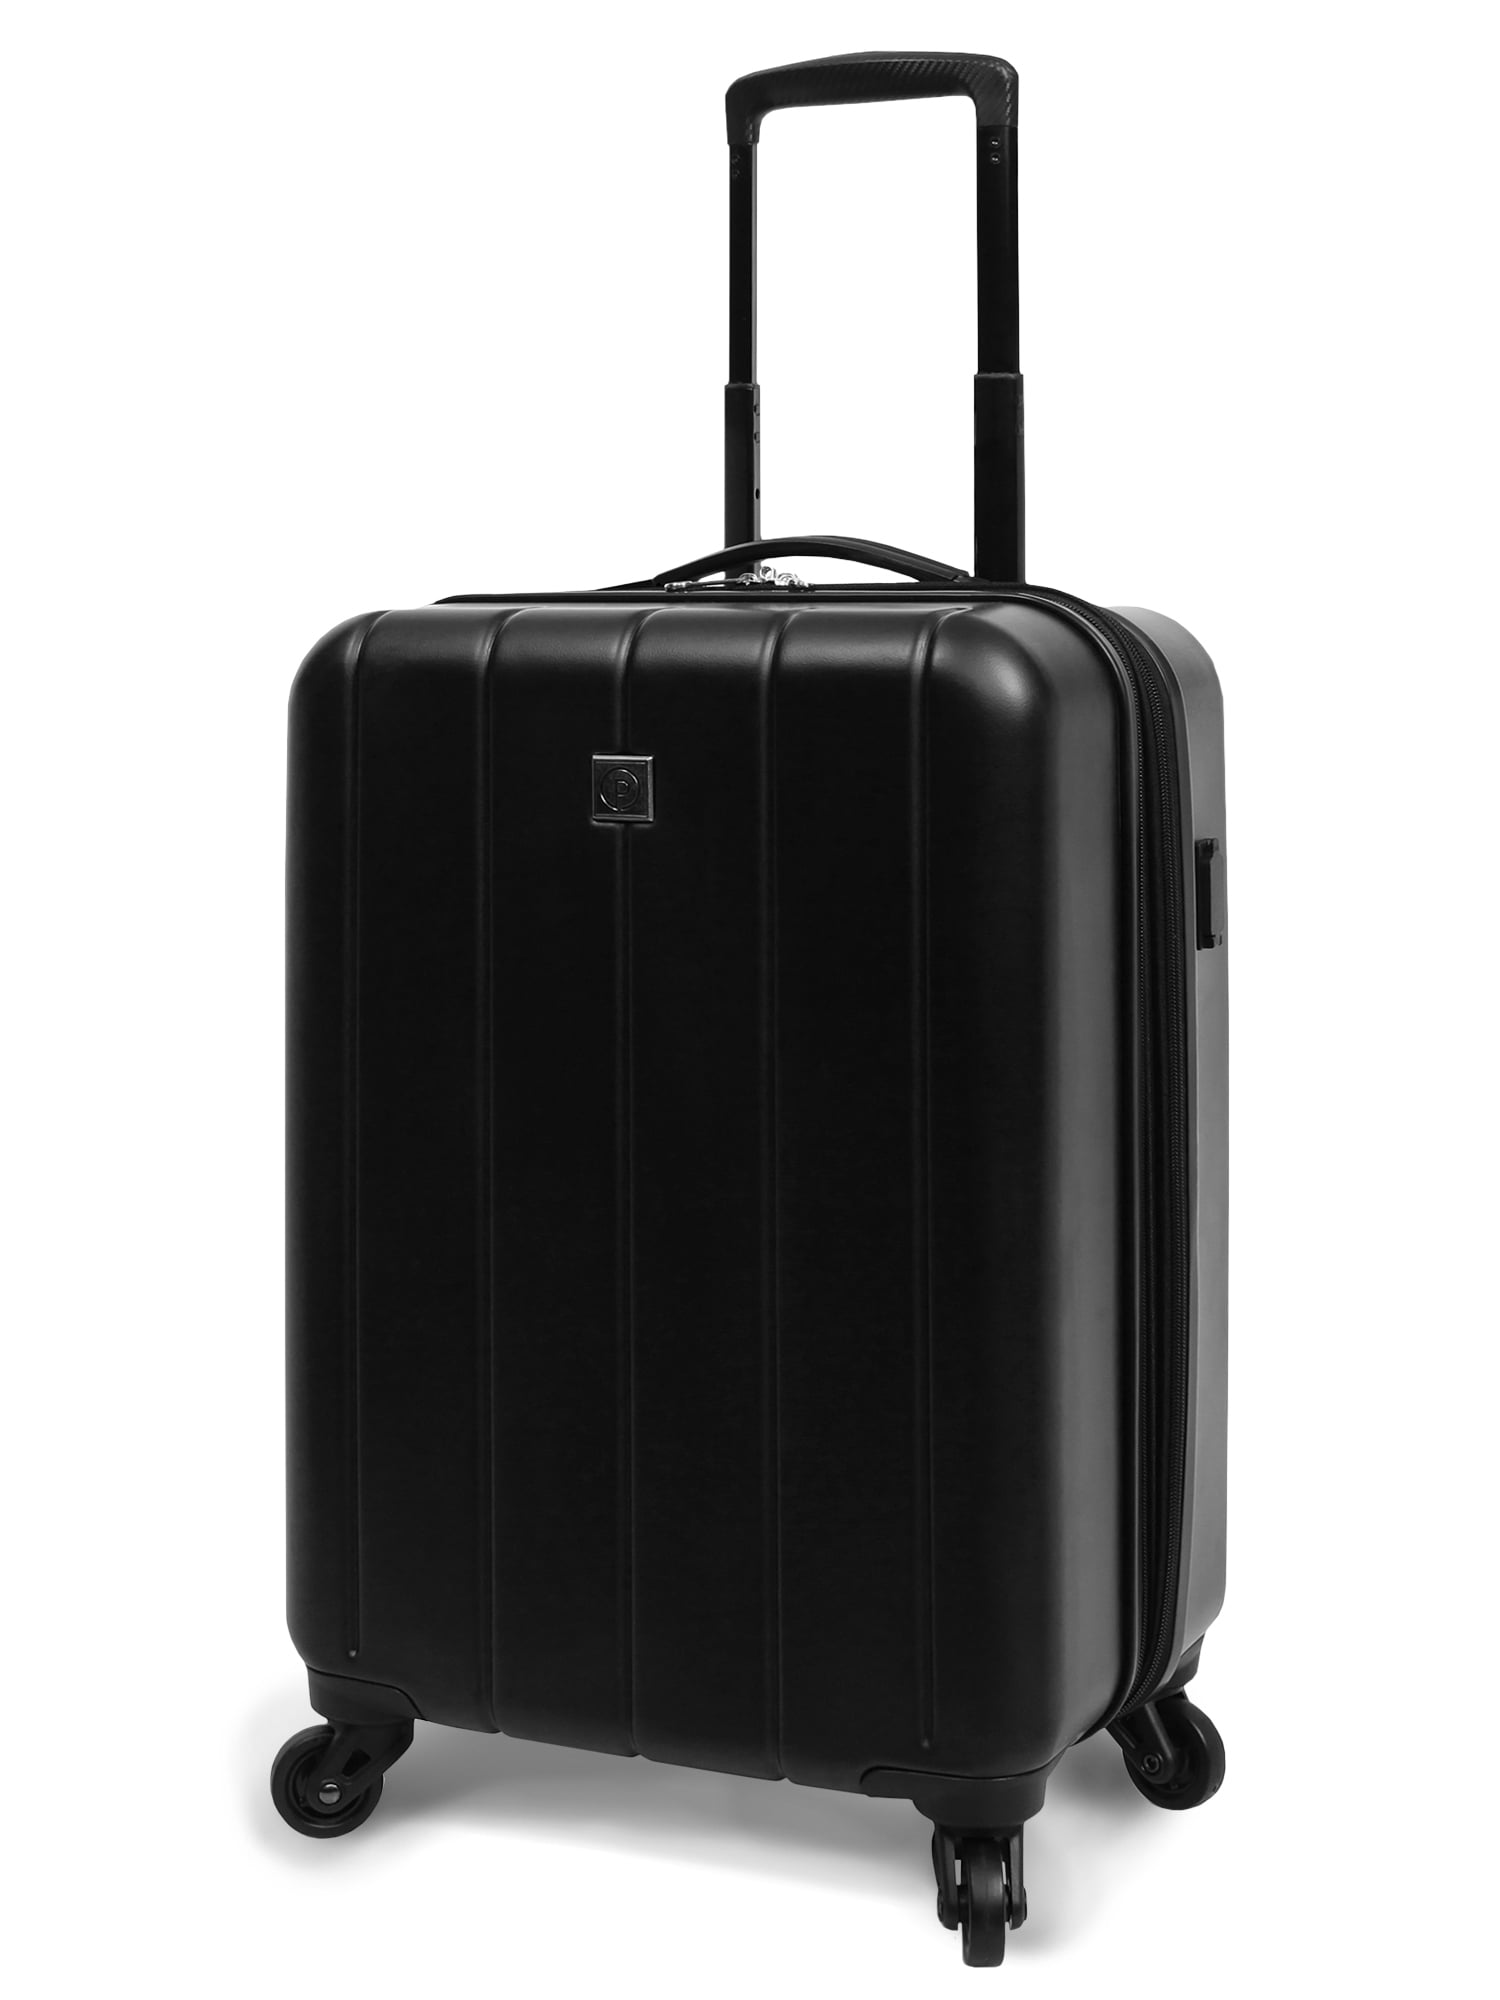 Pearson Hard Side Carry On Luggage, Black Matte (Walmart -